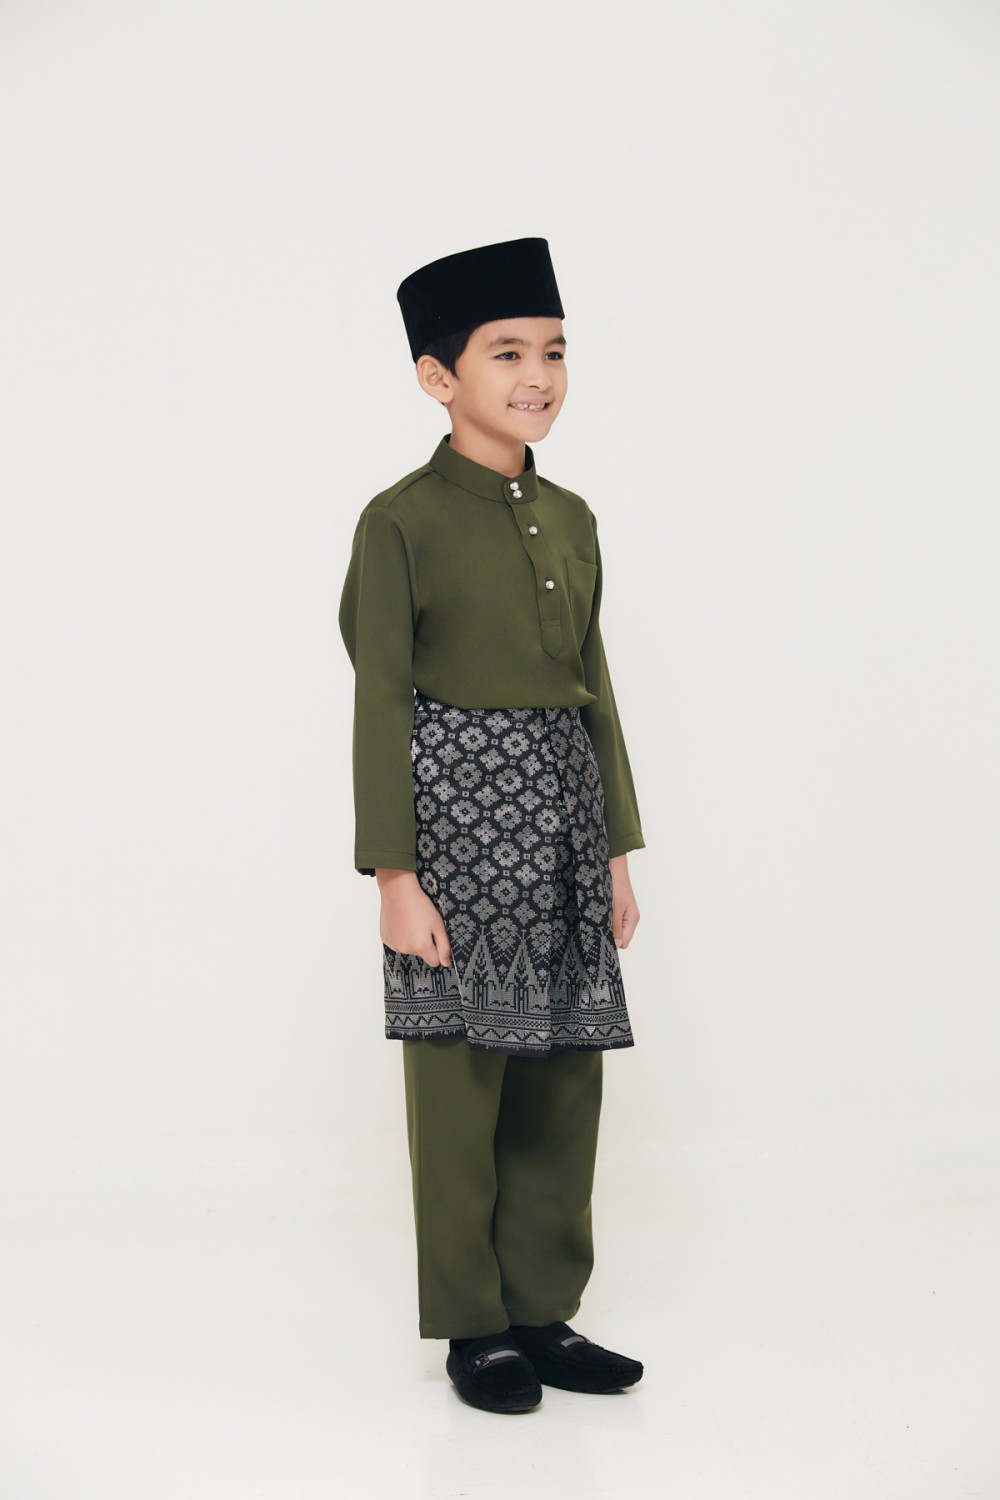 Baju Melayu Juma Kids In Army Green